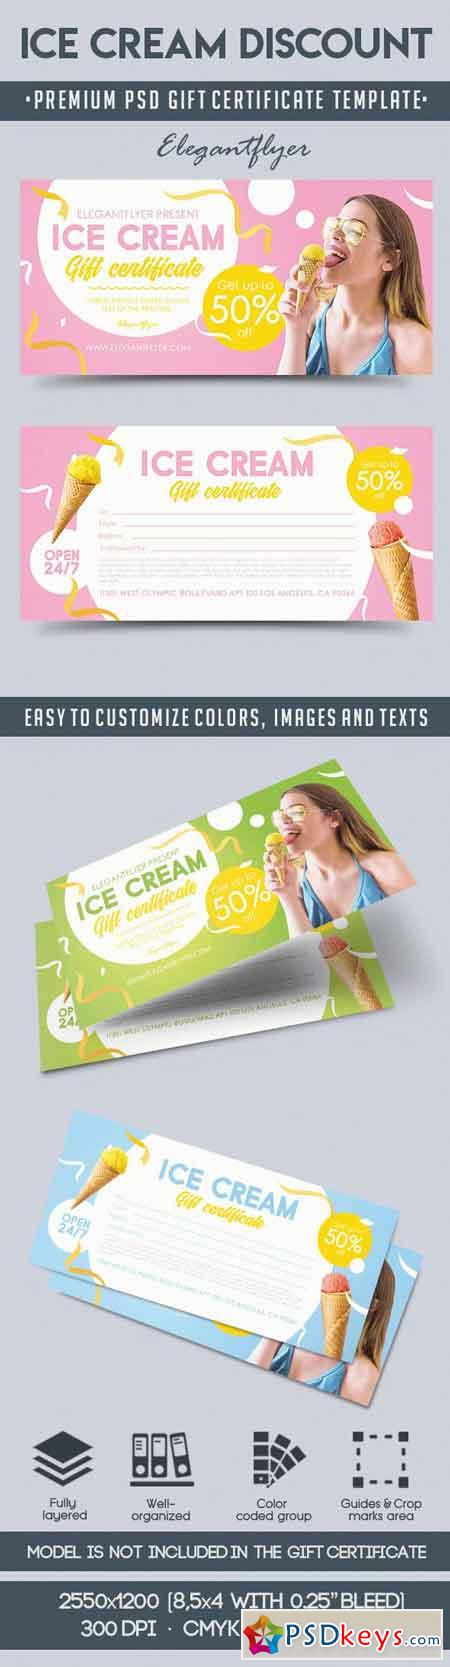 Ice Cream Discount – Premium Gift Certificate PSD Template